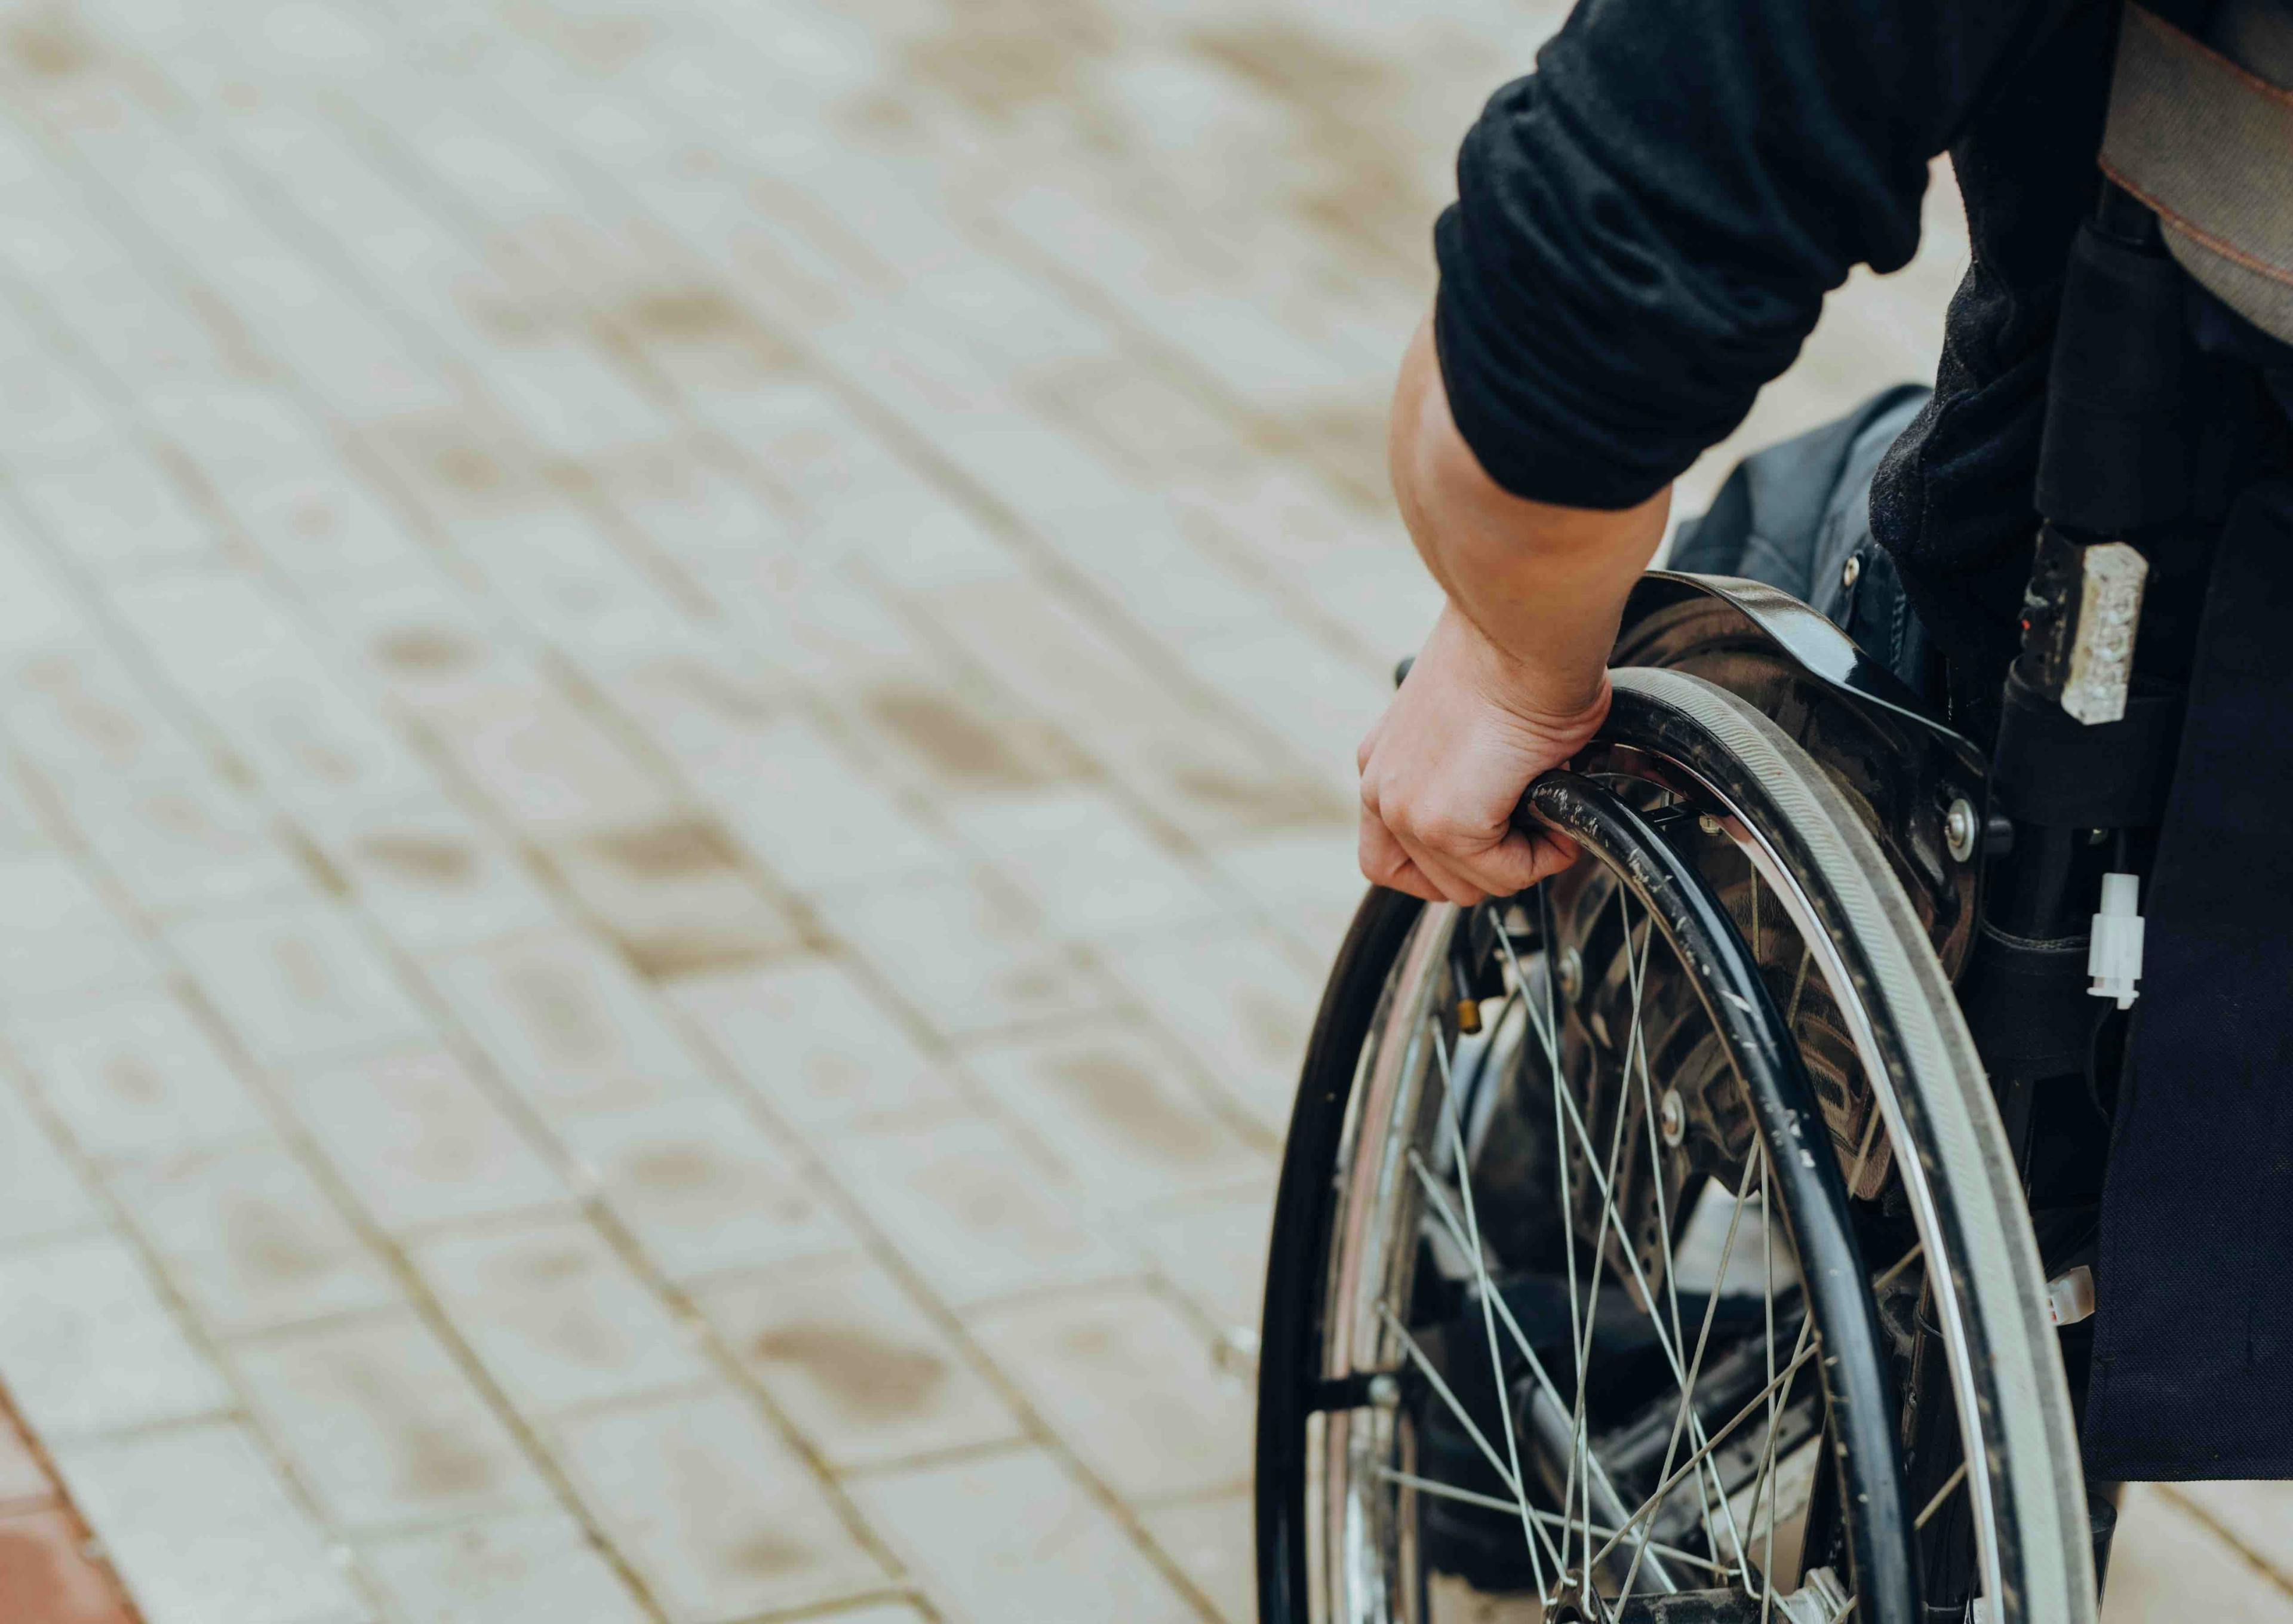 Person in wheelchair | Image credit: LIGHTFIELD STUDIOS - stock.adobe.com